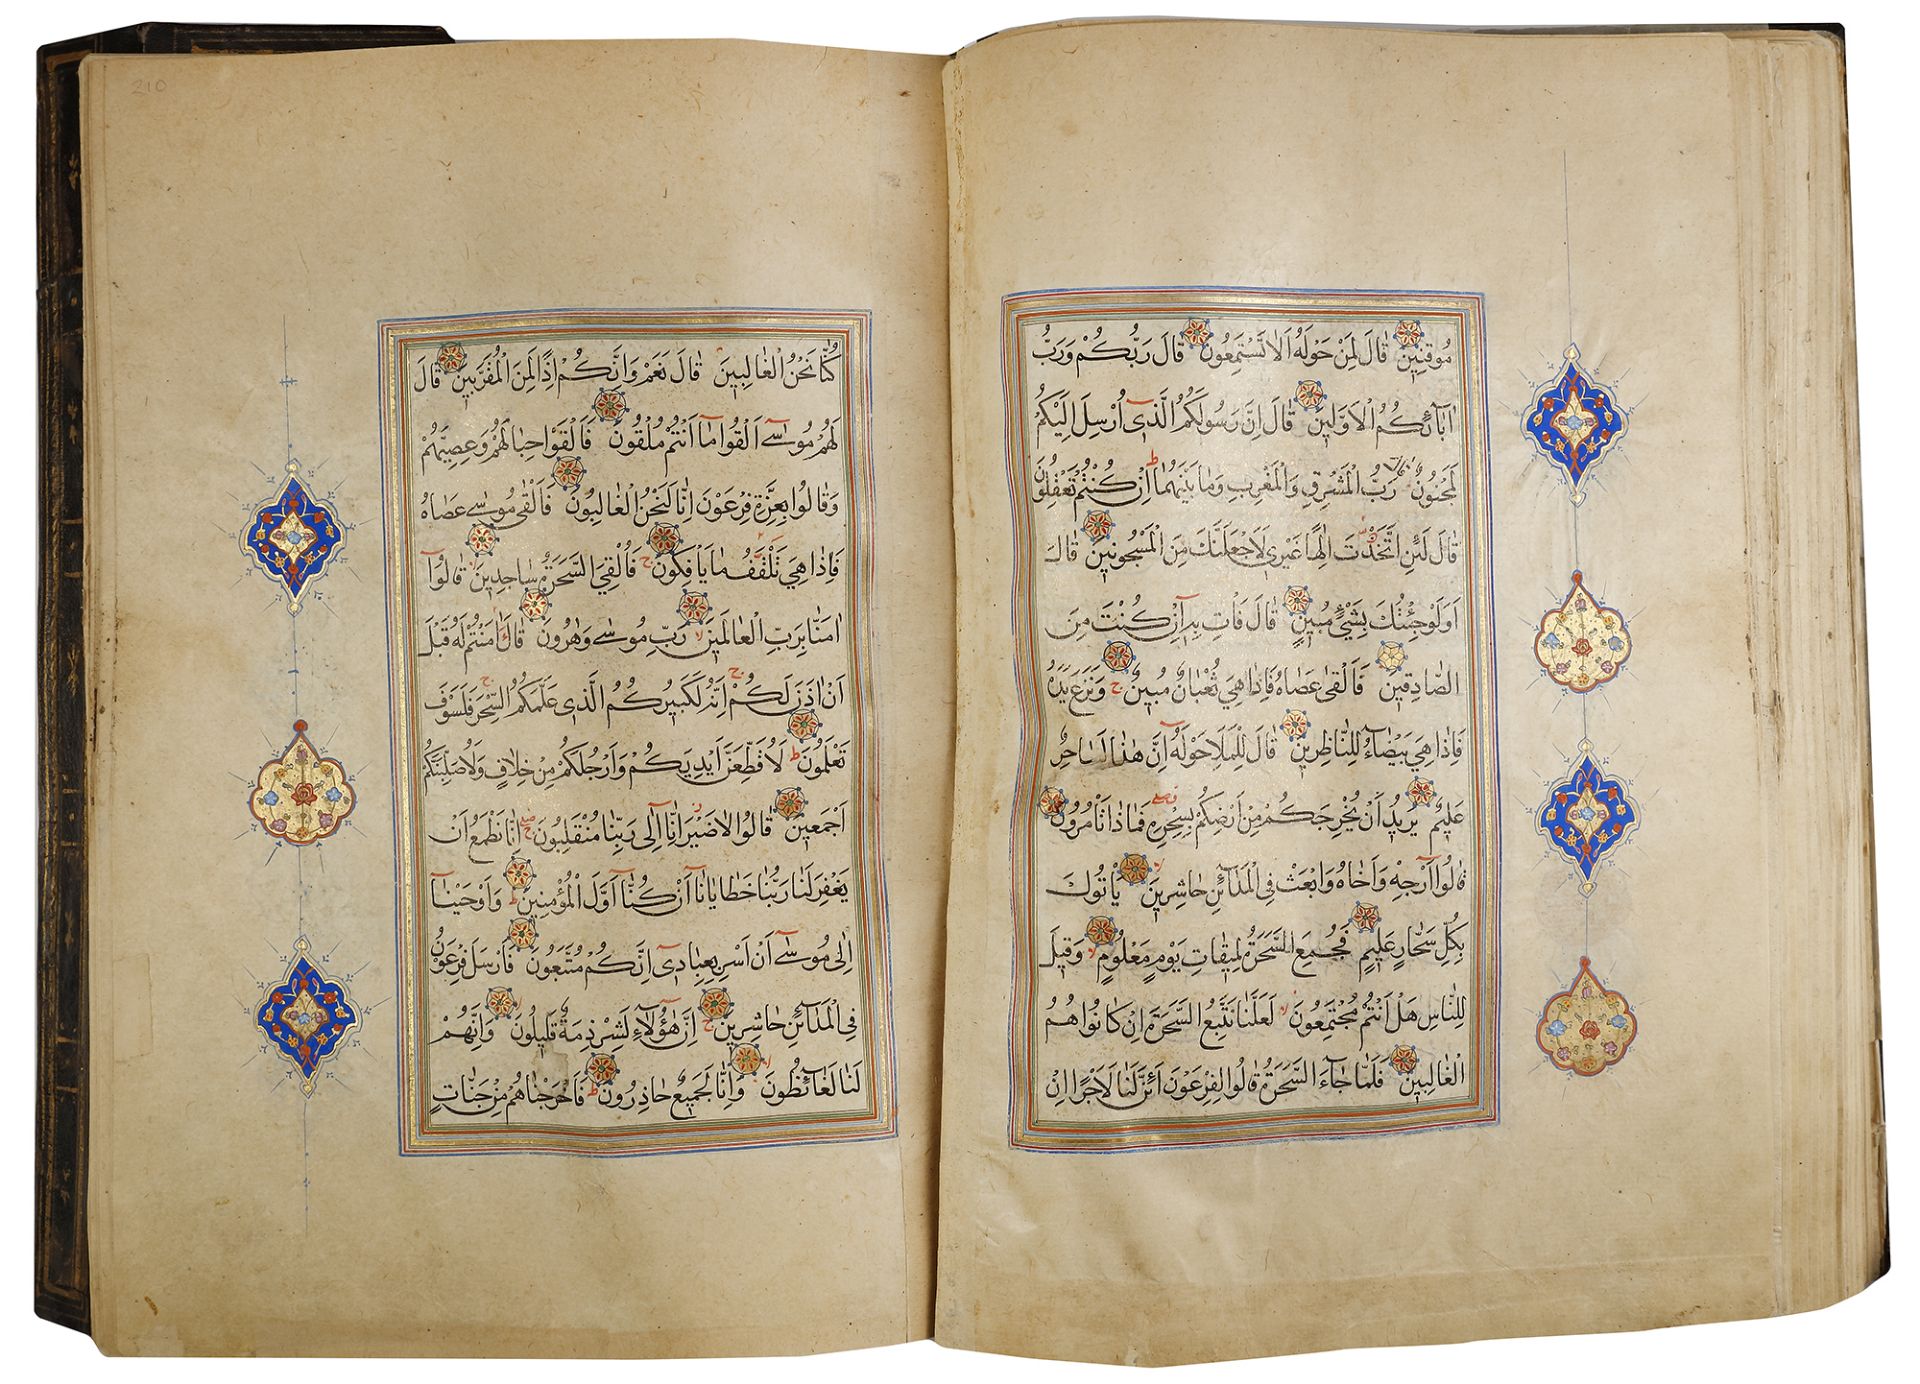 A LARGE ILLUMINATED QURAN, COPIED BY 'ALA'-AL-DIN MUHAMMAD AL-TABRIZI SAFAVID, PERSIA, 16TH CENT - Image 14 of 26